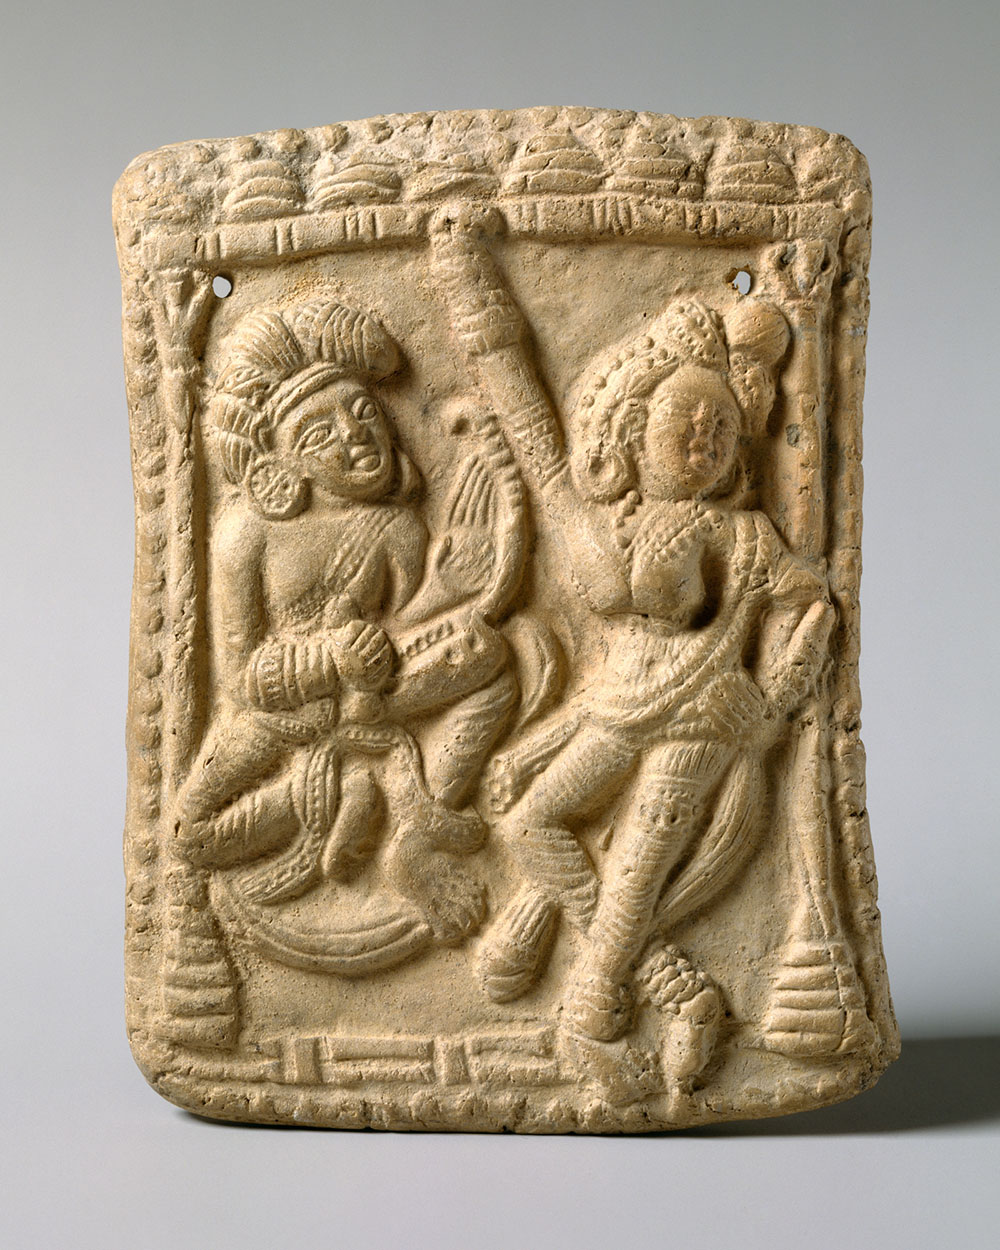 Plaque Depicting Dancer and Instrumentalist
circa 100–1 BCE
India; Uttar Pradesh
terracotta
Metropolitan Museum of Art, Samuel Eilenberg Collection, gift of Samuel Eilenberg, 1986.142.376
H. 5 in. (12.7 cm); W. 3 3/4 in. (9.5 cm); D. 7/8 in. (2.2 cm)
